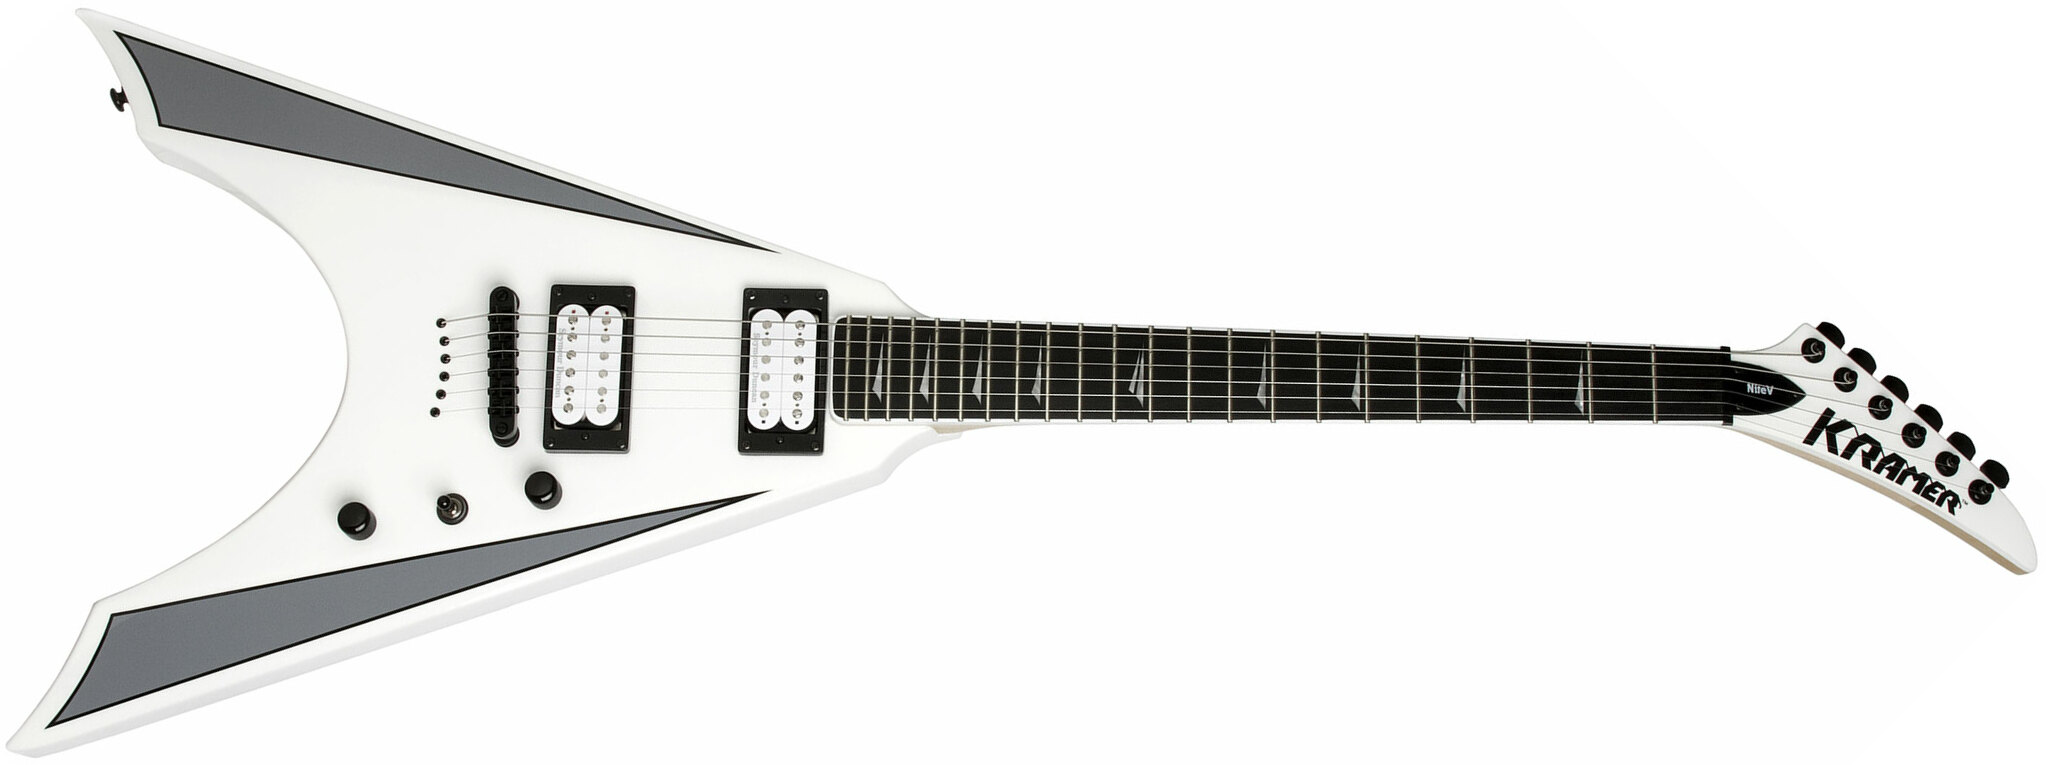 Kramer Nite-v Plus Hh Seymour Duncan Ht Eb - Alpine White - Metal electric guitar - Main picture